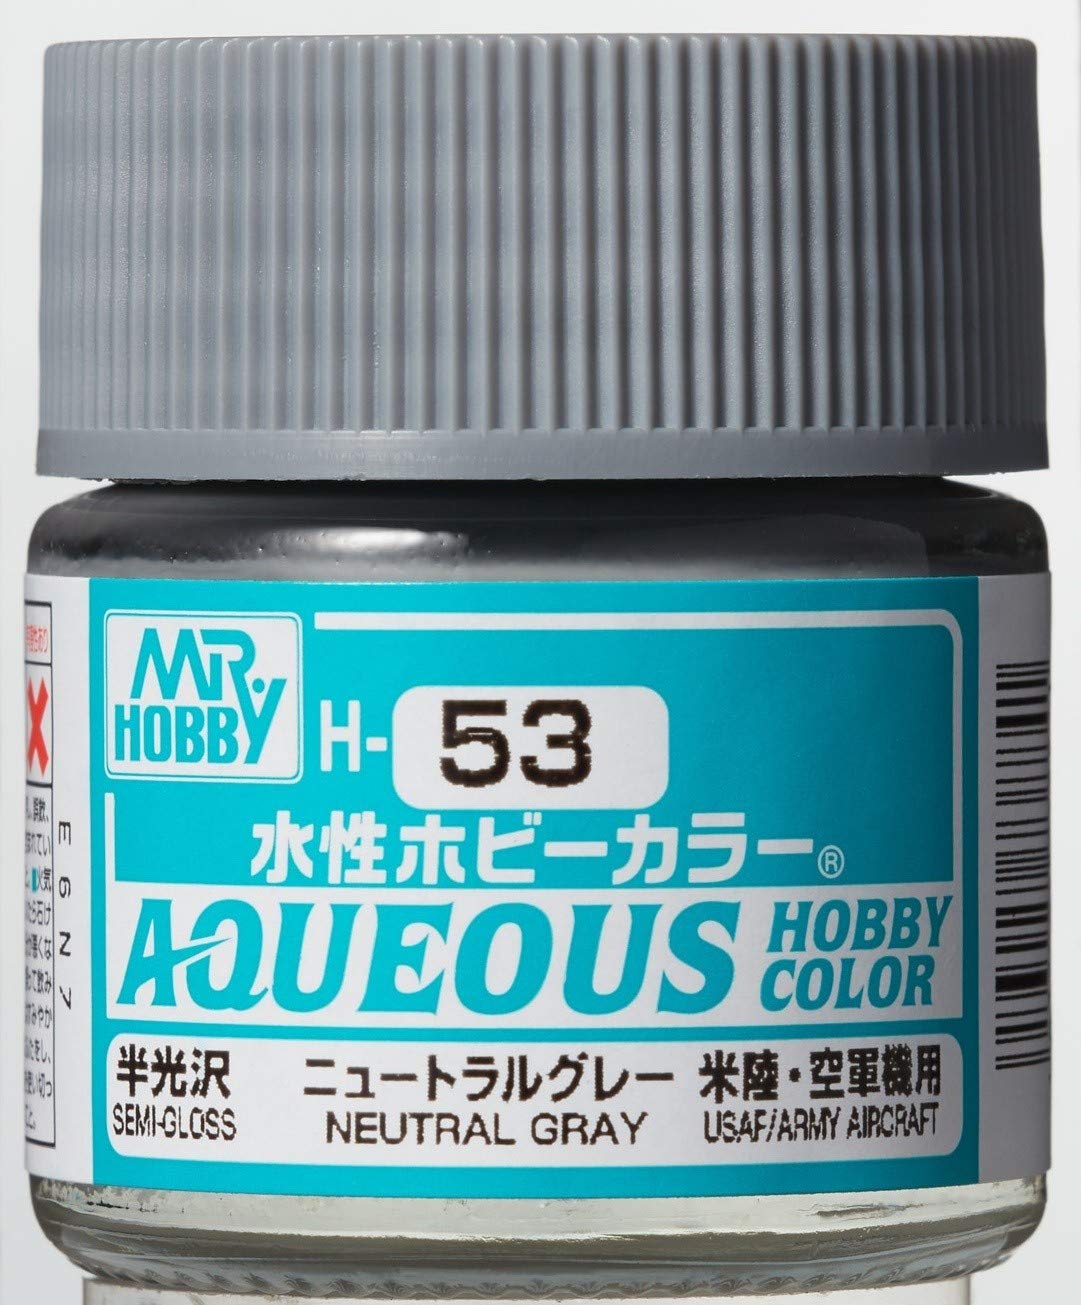 Mr. Hobby Aqueous Hobby Color H53 Semi-Gloss Neutral Gray 10ml Bottle